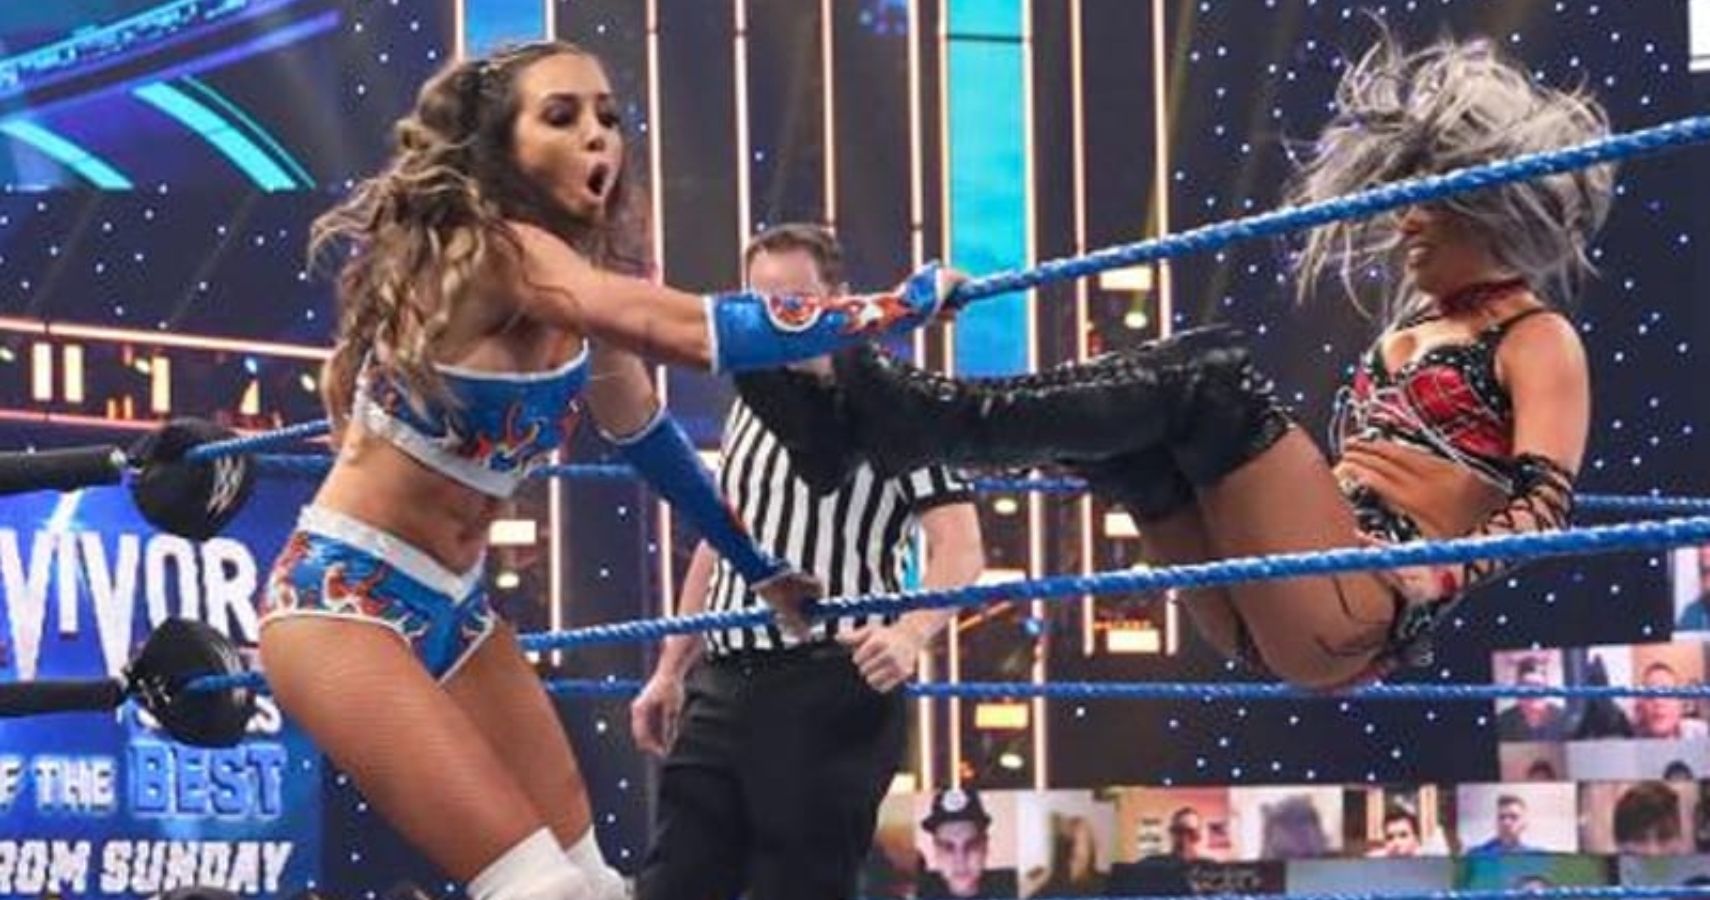 Chelsea Green injured on her SmackDown Debut